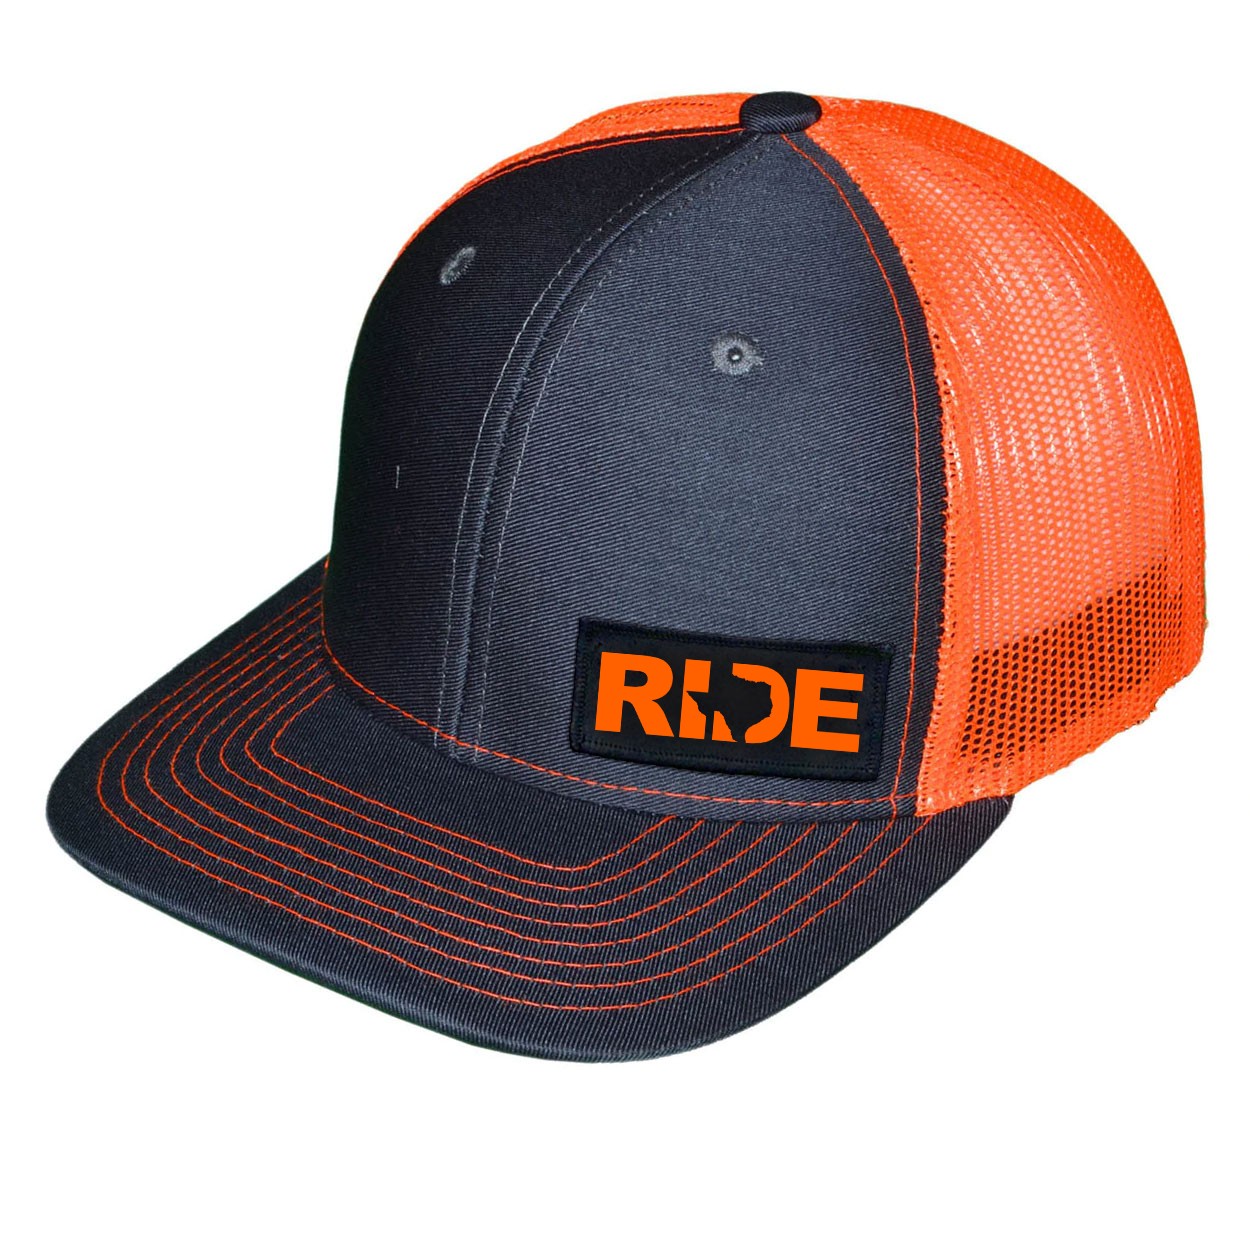 Ride Texas Night Out Woven Patch Snapback Trucker Hat Gray/Orange (Orange Logo)